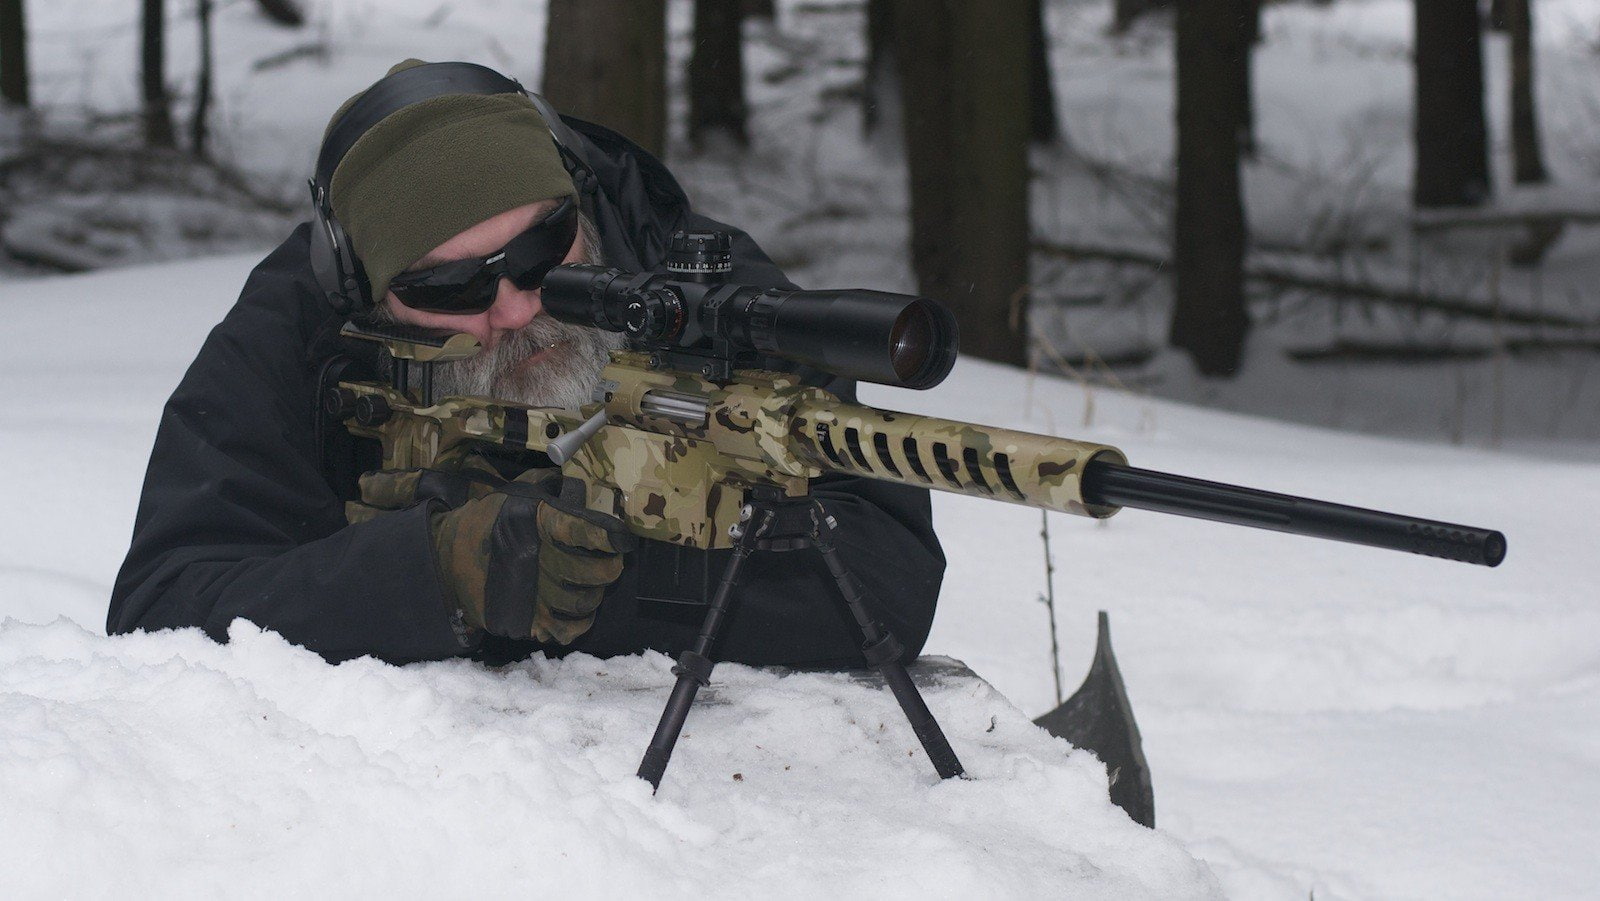 LobaevArms, Sniper Rifle, winter, cold temperature, snow, weapon